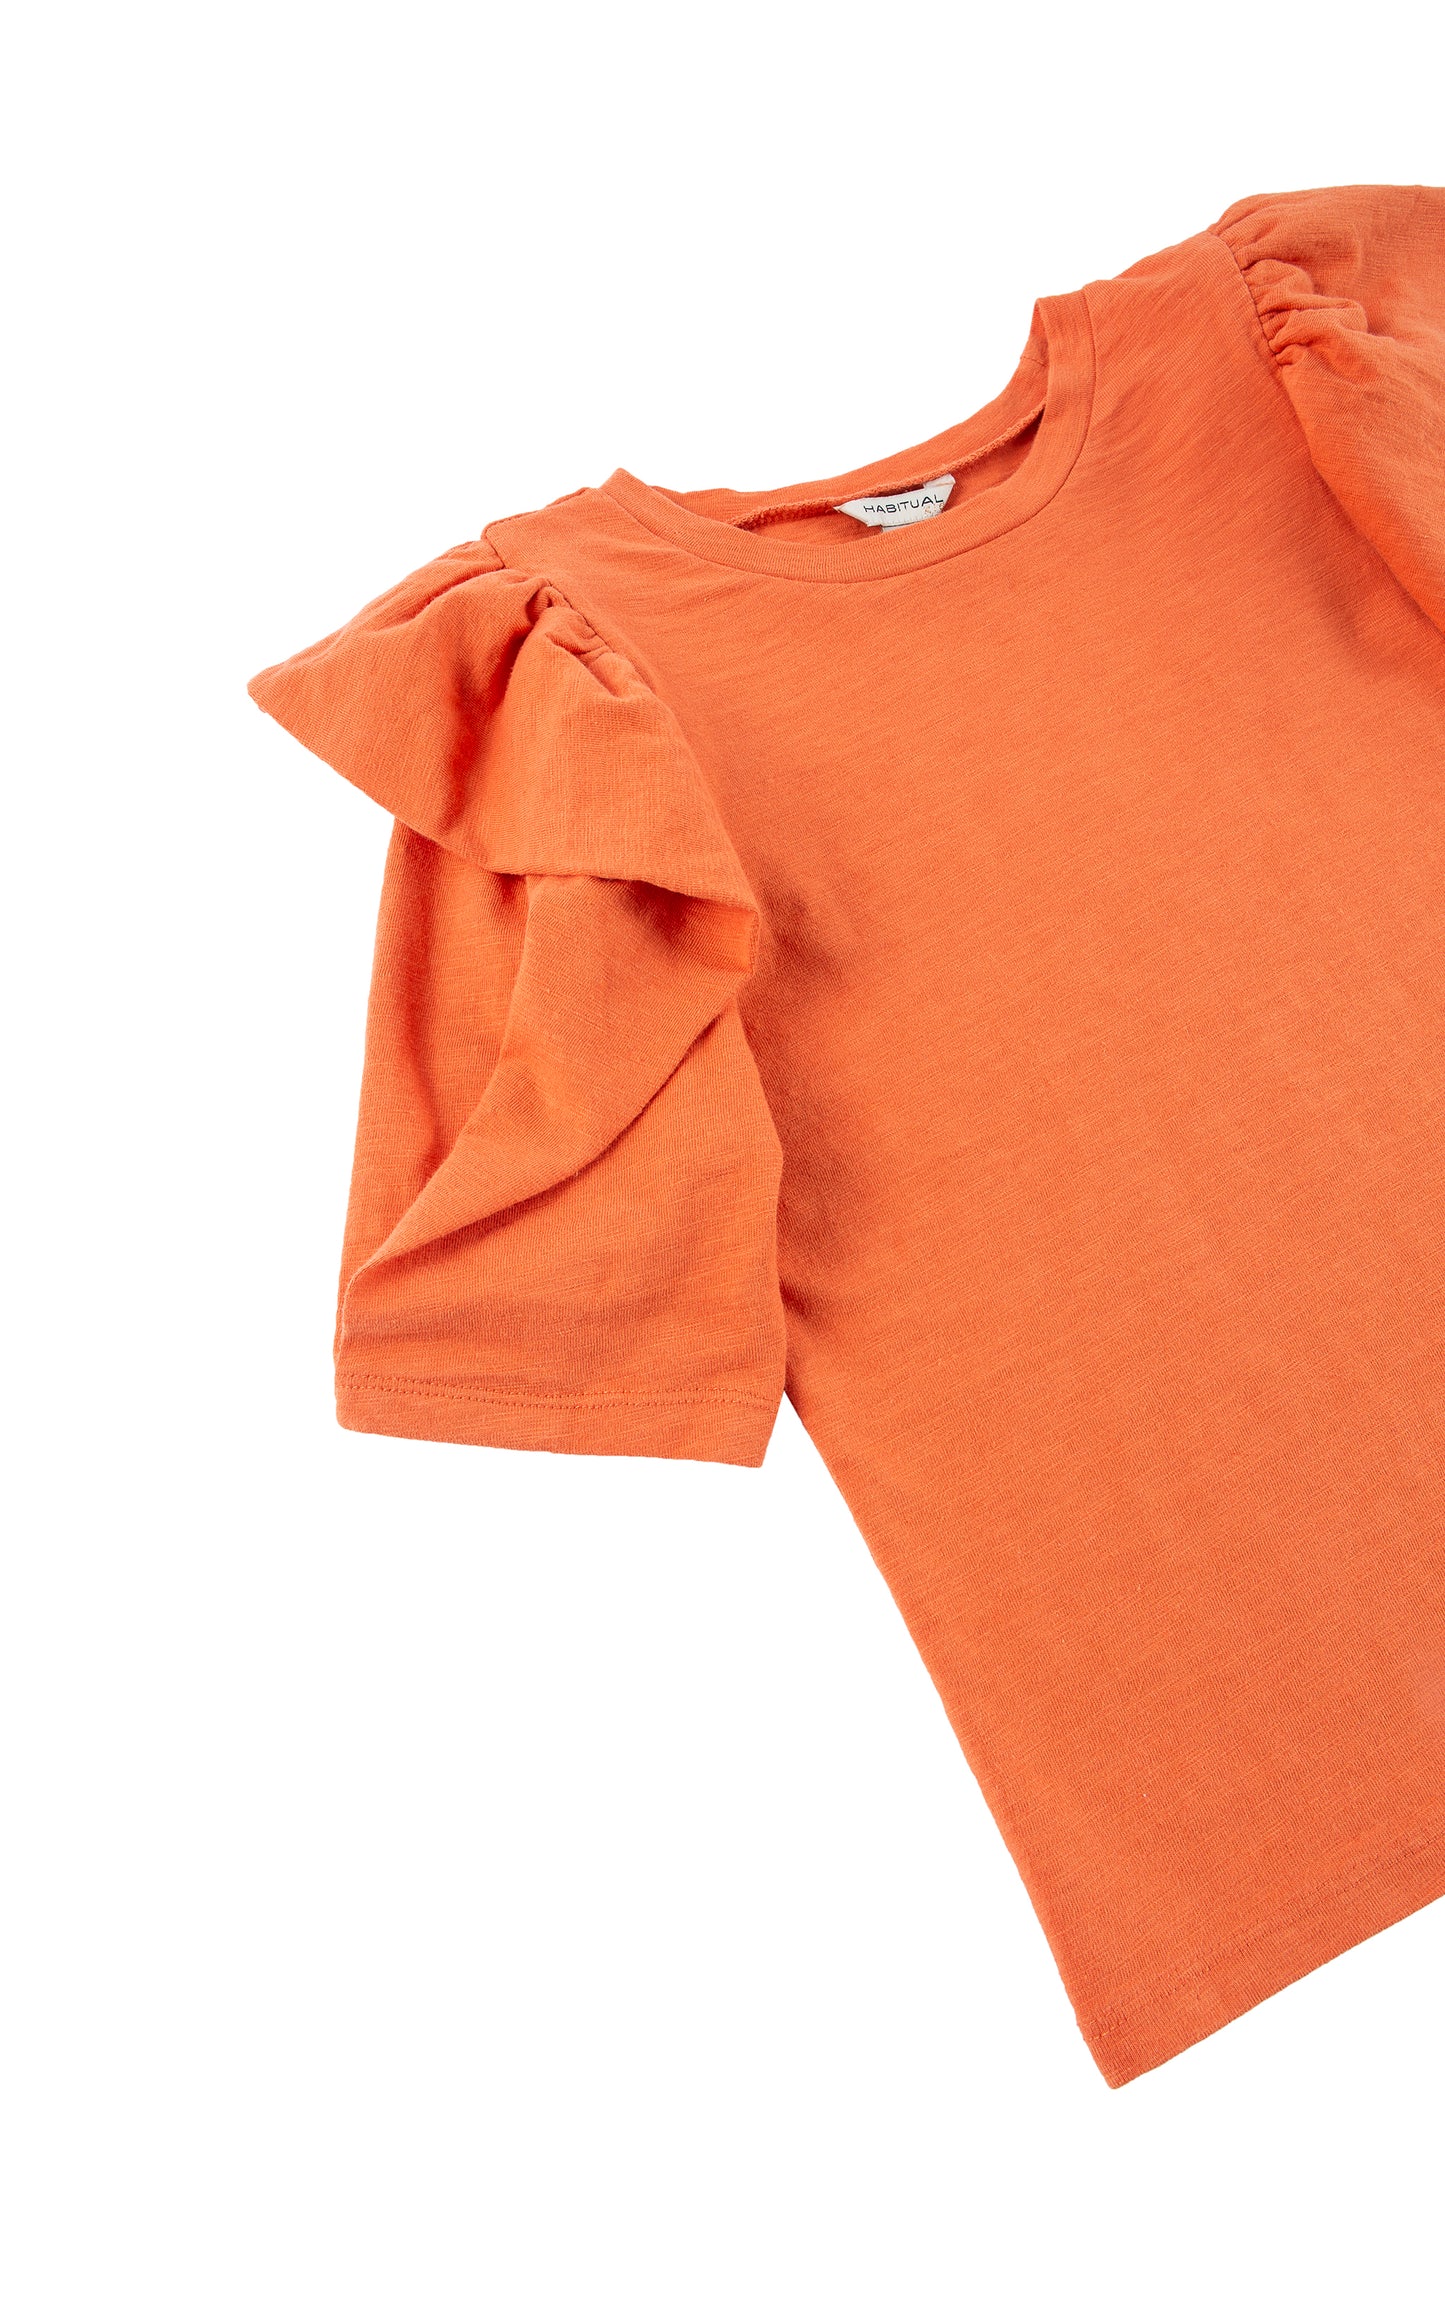 Sleeve View Orange Top with Large sleeve ruffle 